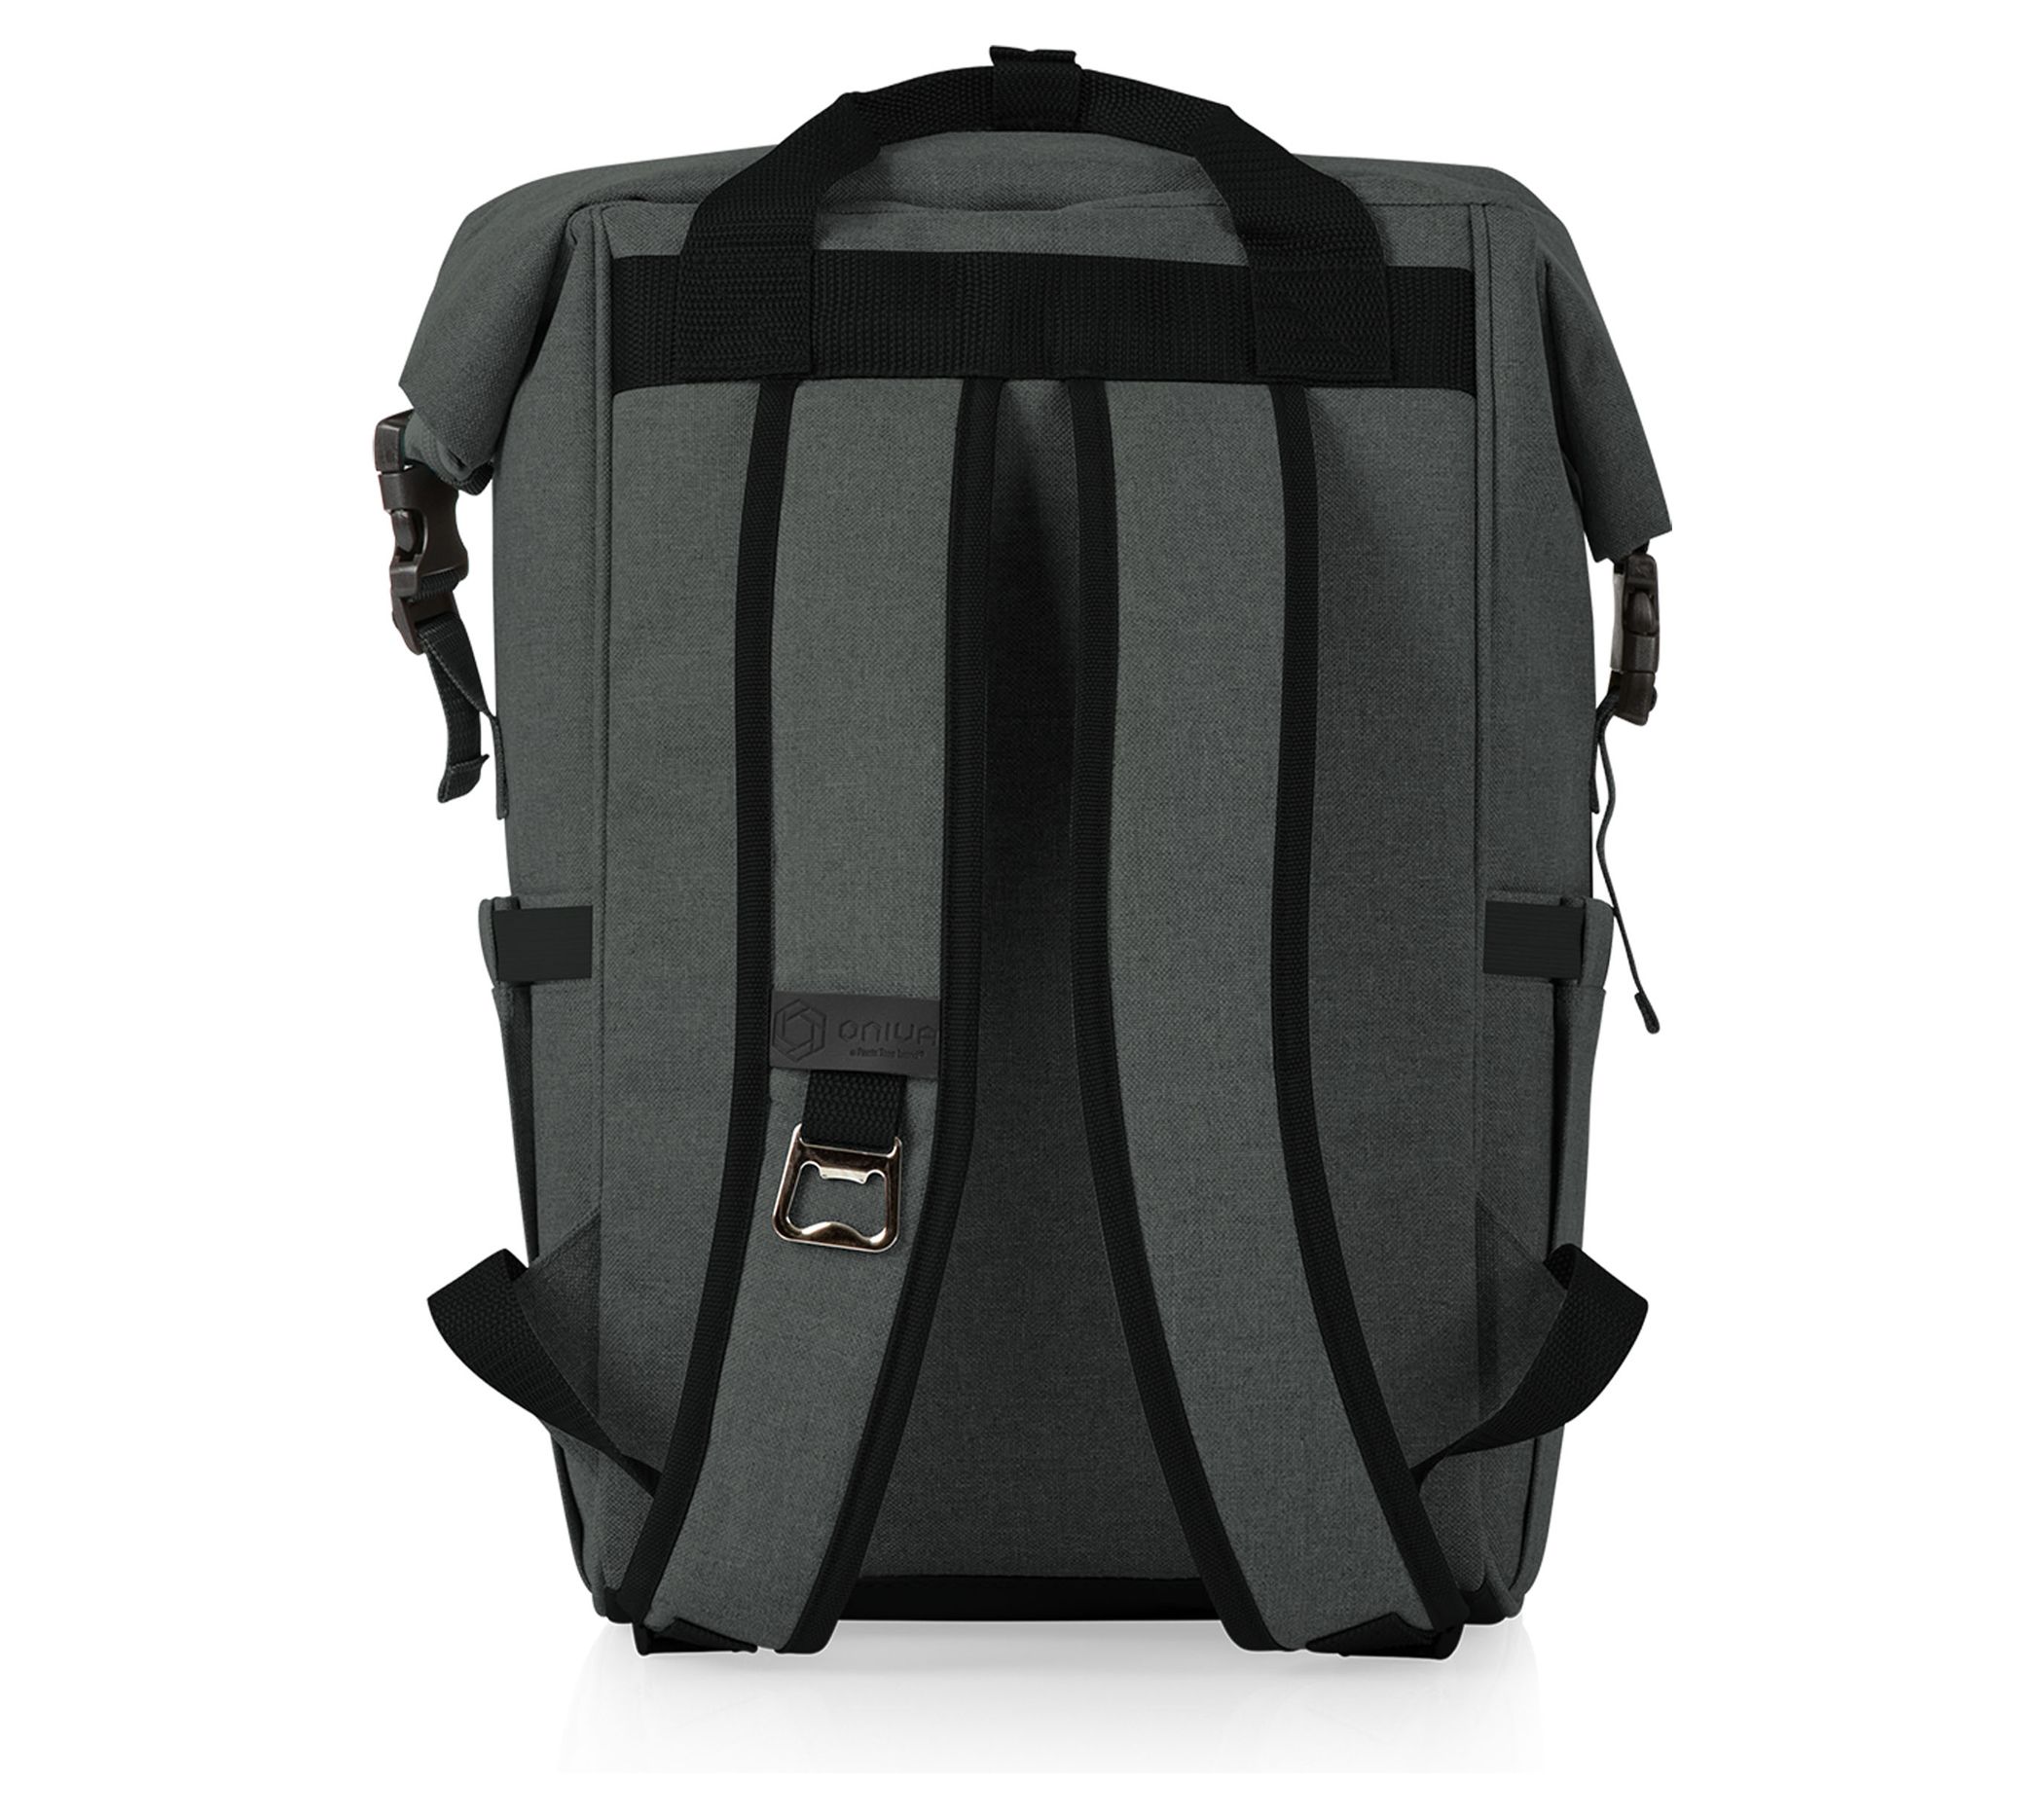 Tarana Backpack Cooler - Stylish & Eco-Friendly for On-the-Go